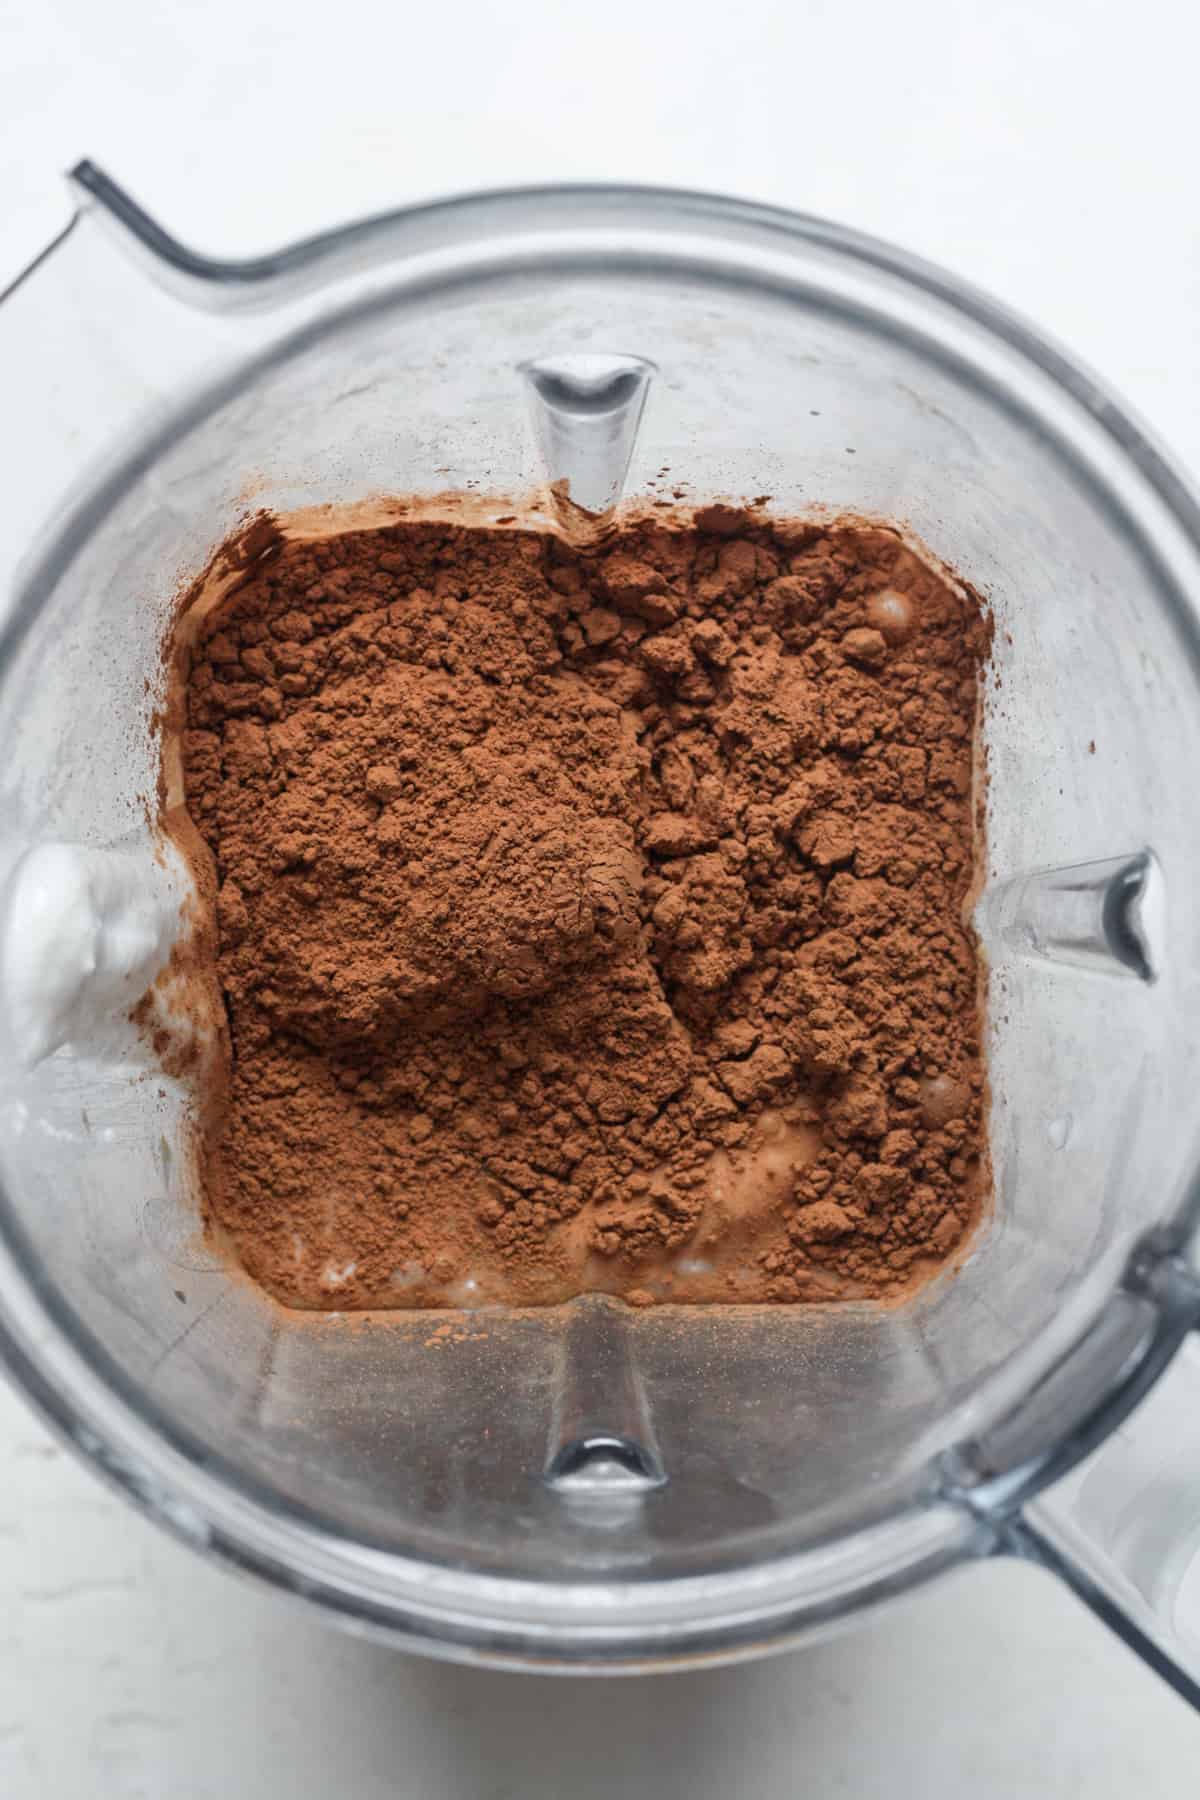 Cocoa in Vitamix blender.